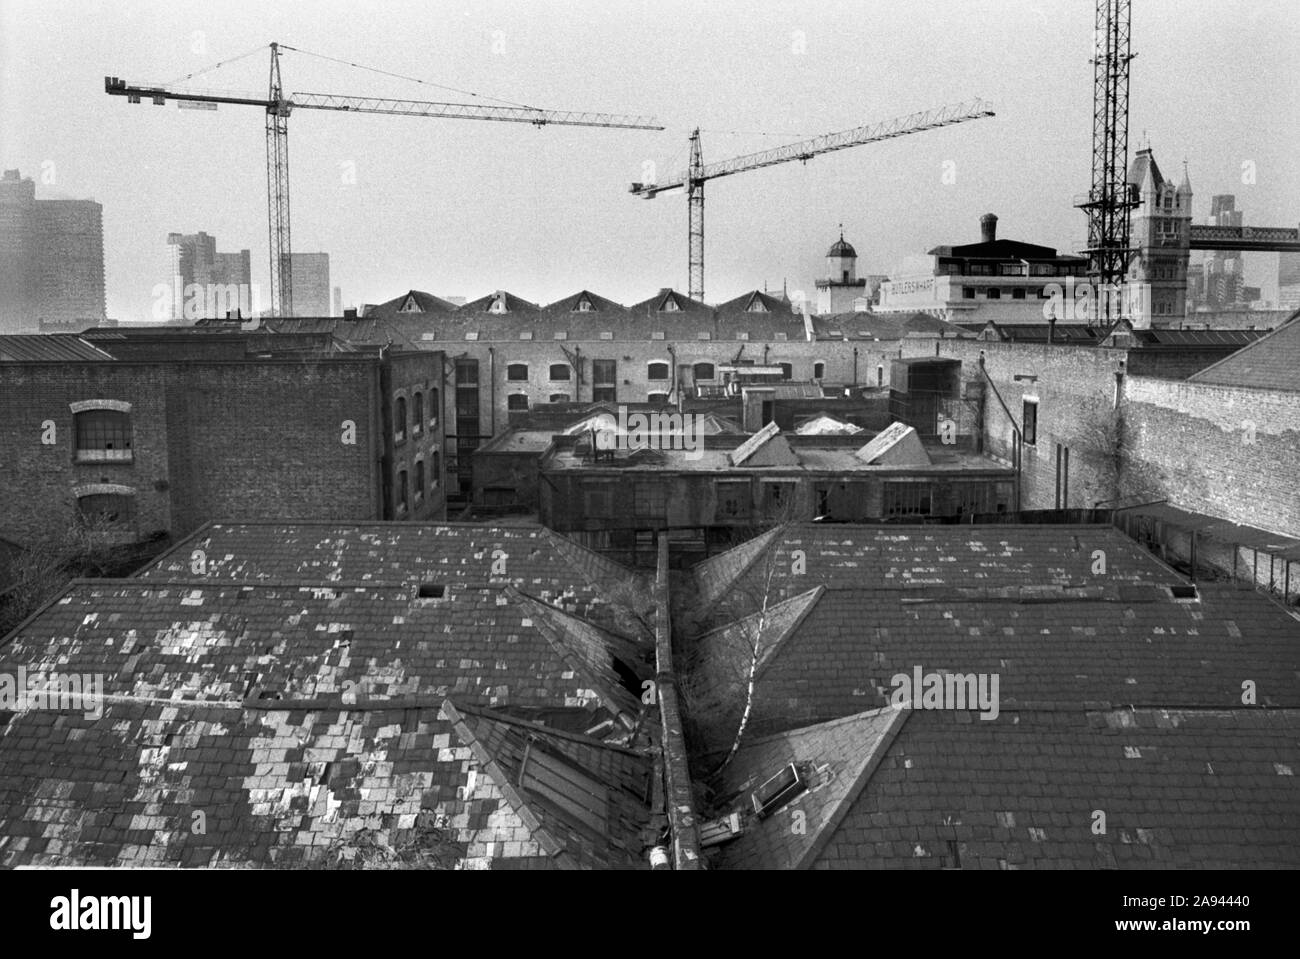 Butlers Wharf  building the London Docklands Development 1980s UK.  Derelict warehouses Southwark, Bermondsey, South East London. 1987  HOMER SYKES Stock Photo